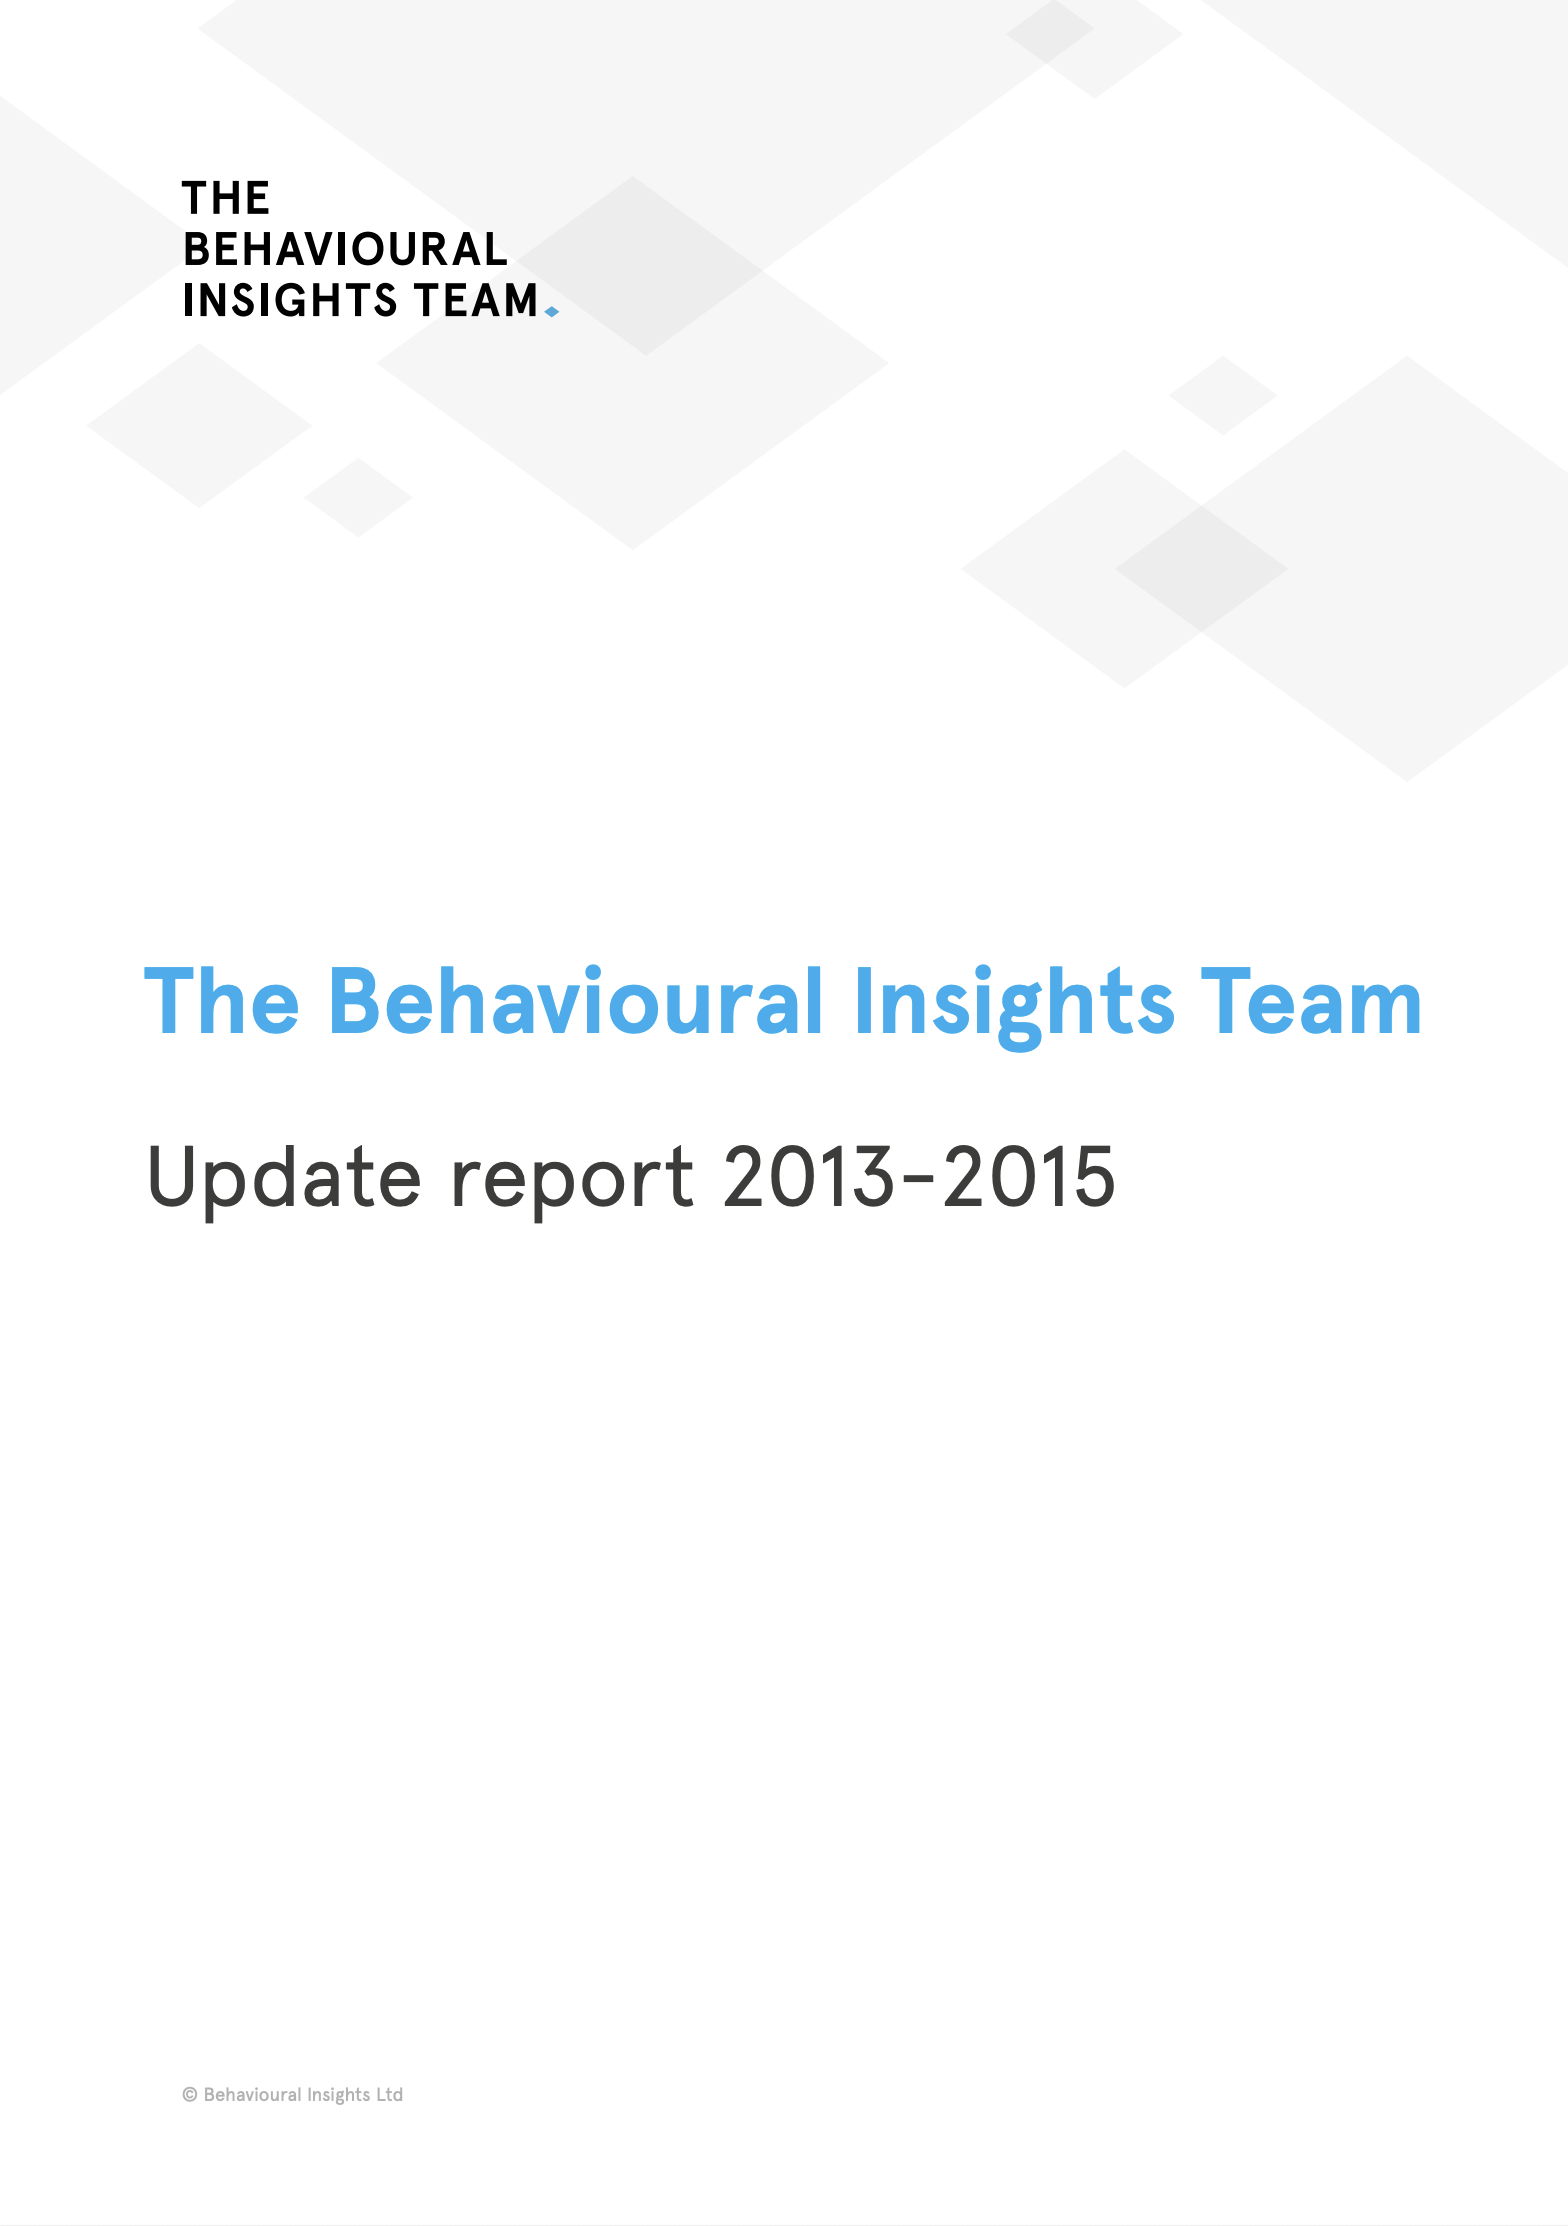 The Behavioural Insights Team Update Report